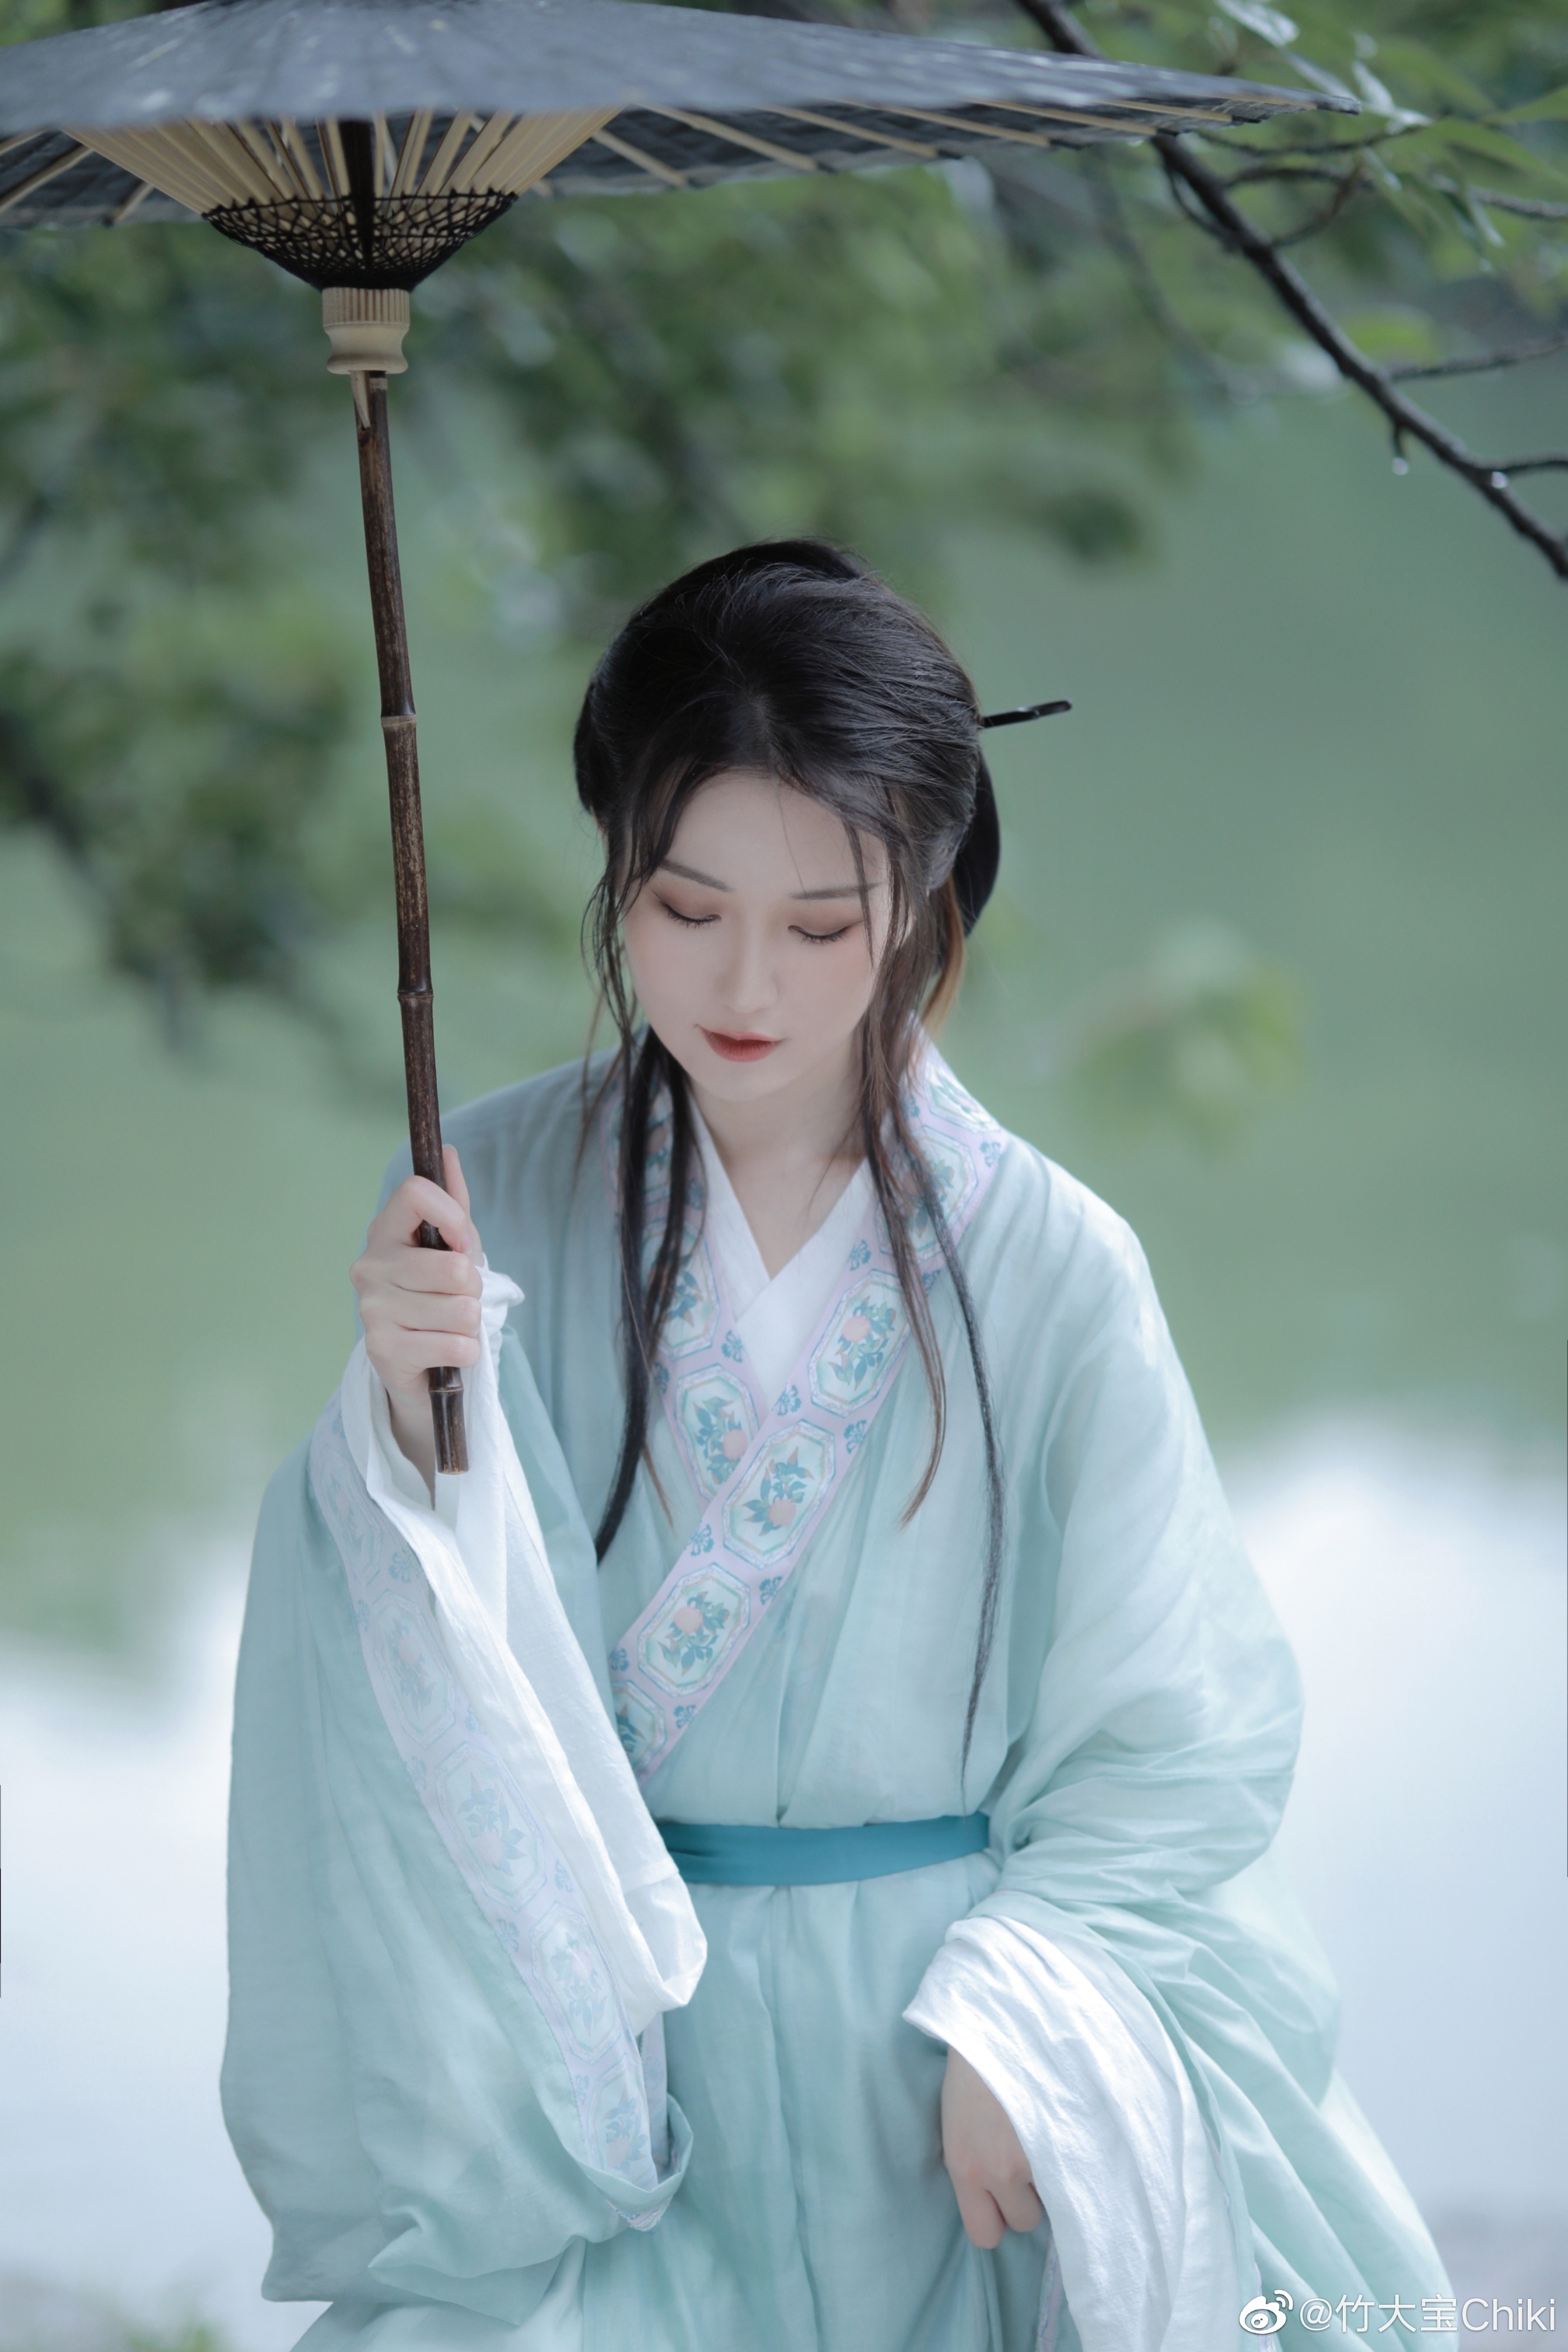 People 2688x4032 umbrella Chinese dress Traditional Chinese clothing Asian women hanfu